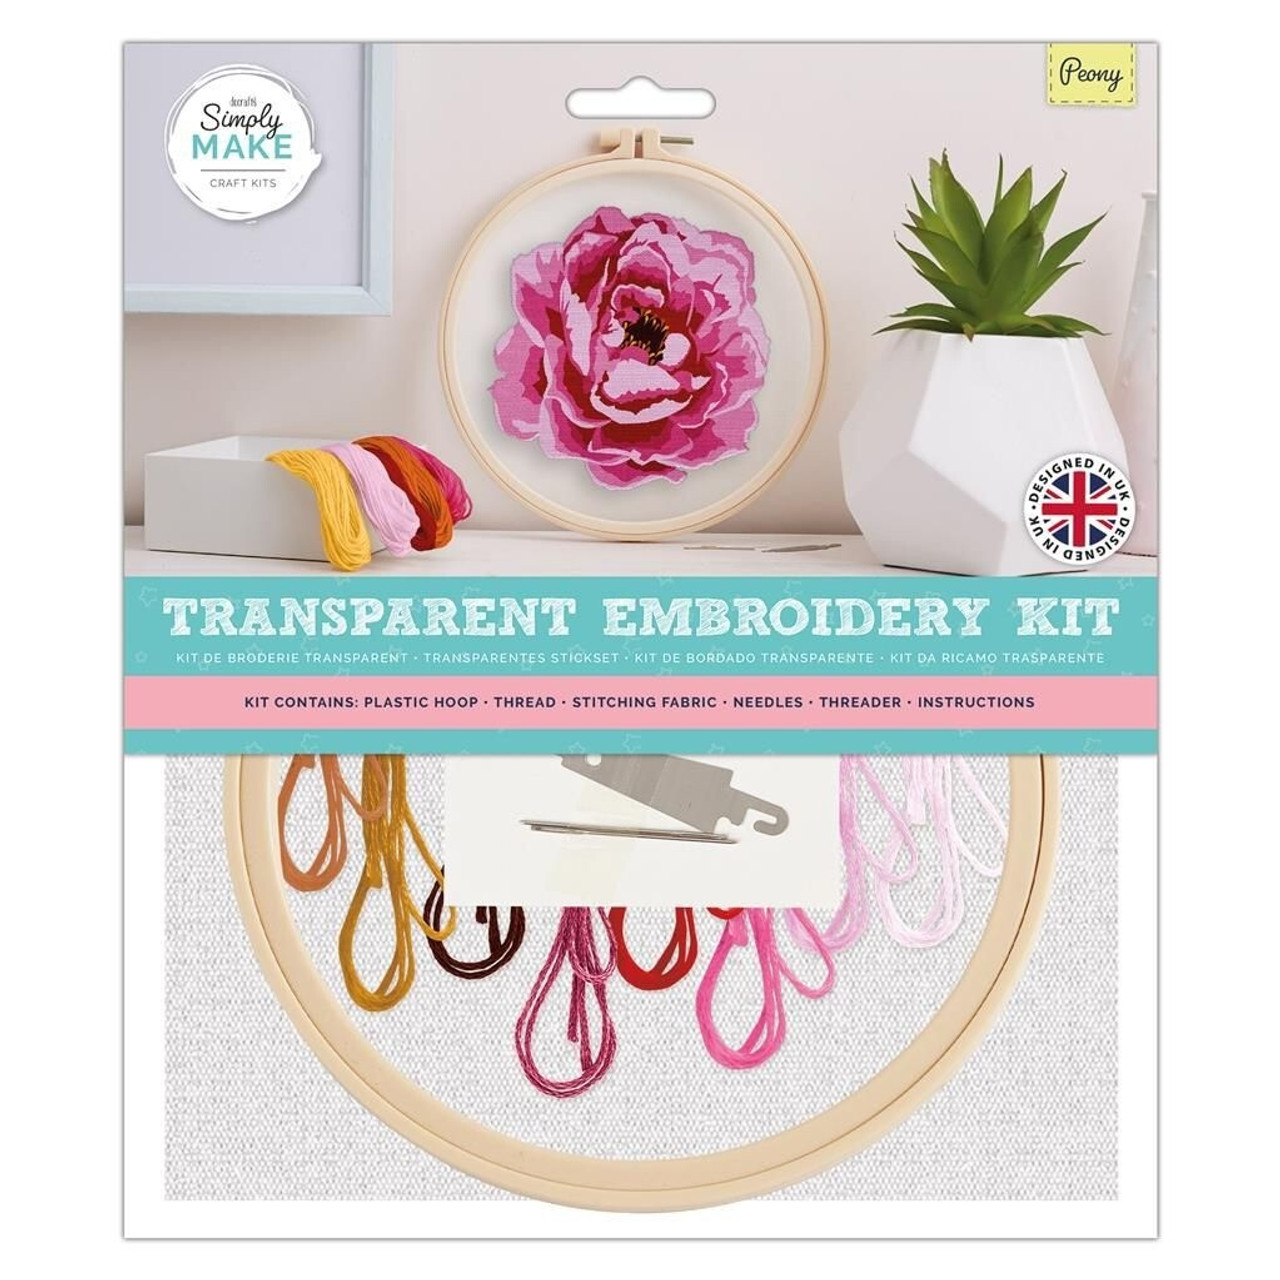 Embroidery Kit - Peony